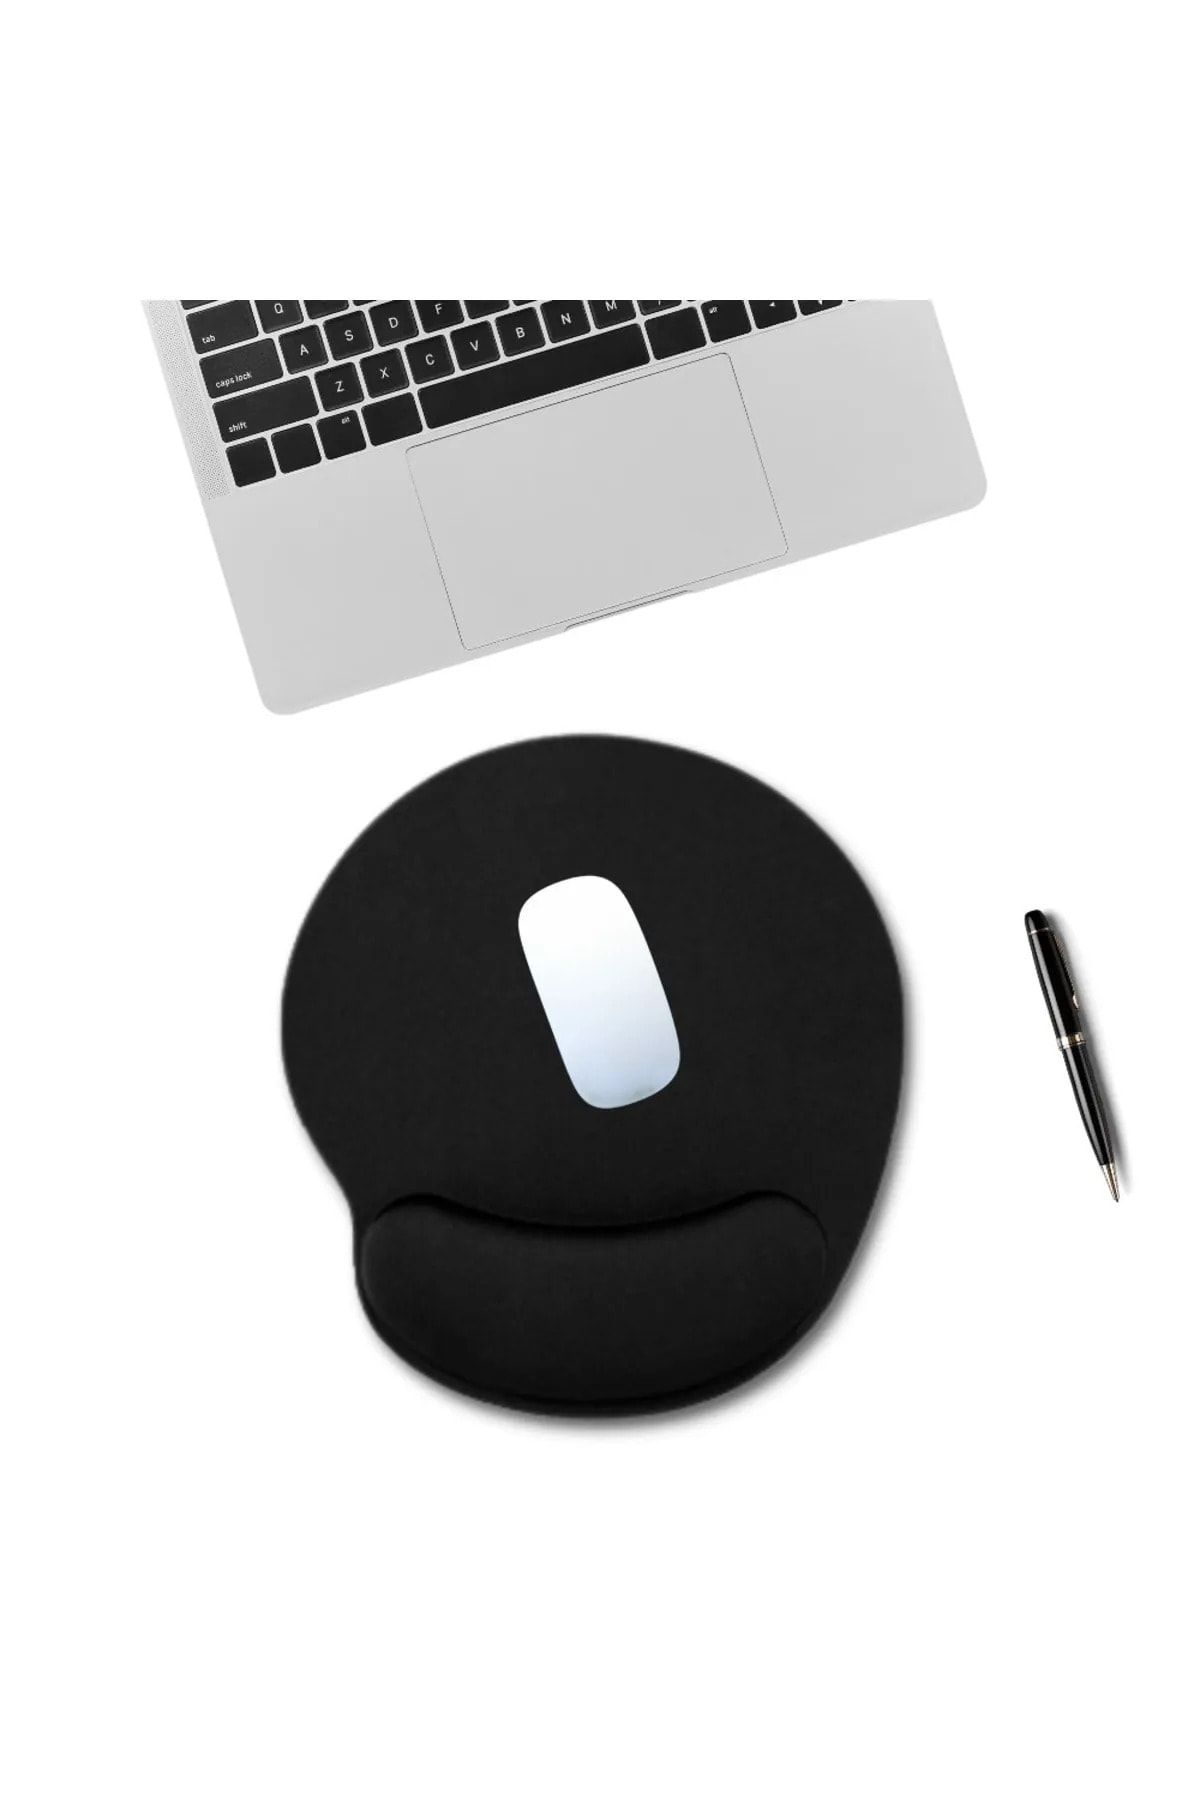 BLACK DEER Bilek Destekli Mouse Pad, Flexible Ergonomik Mouse Pad, Rahat Mouse Pad,kaymaz Taban,siyah